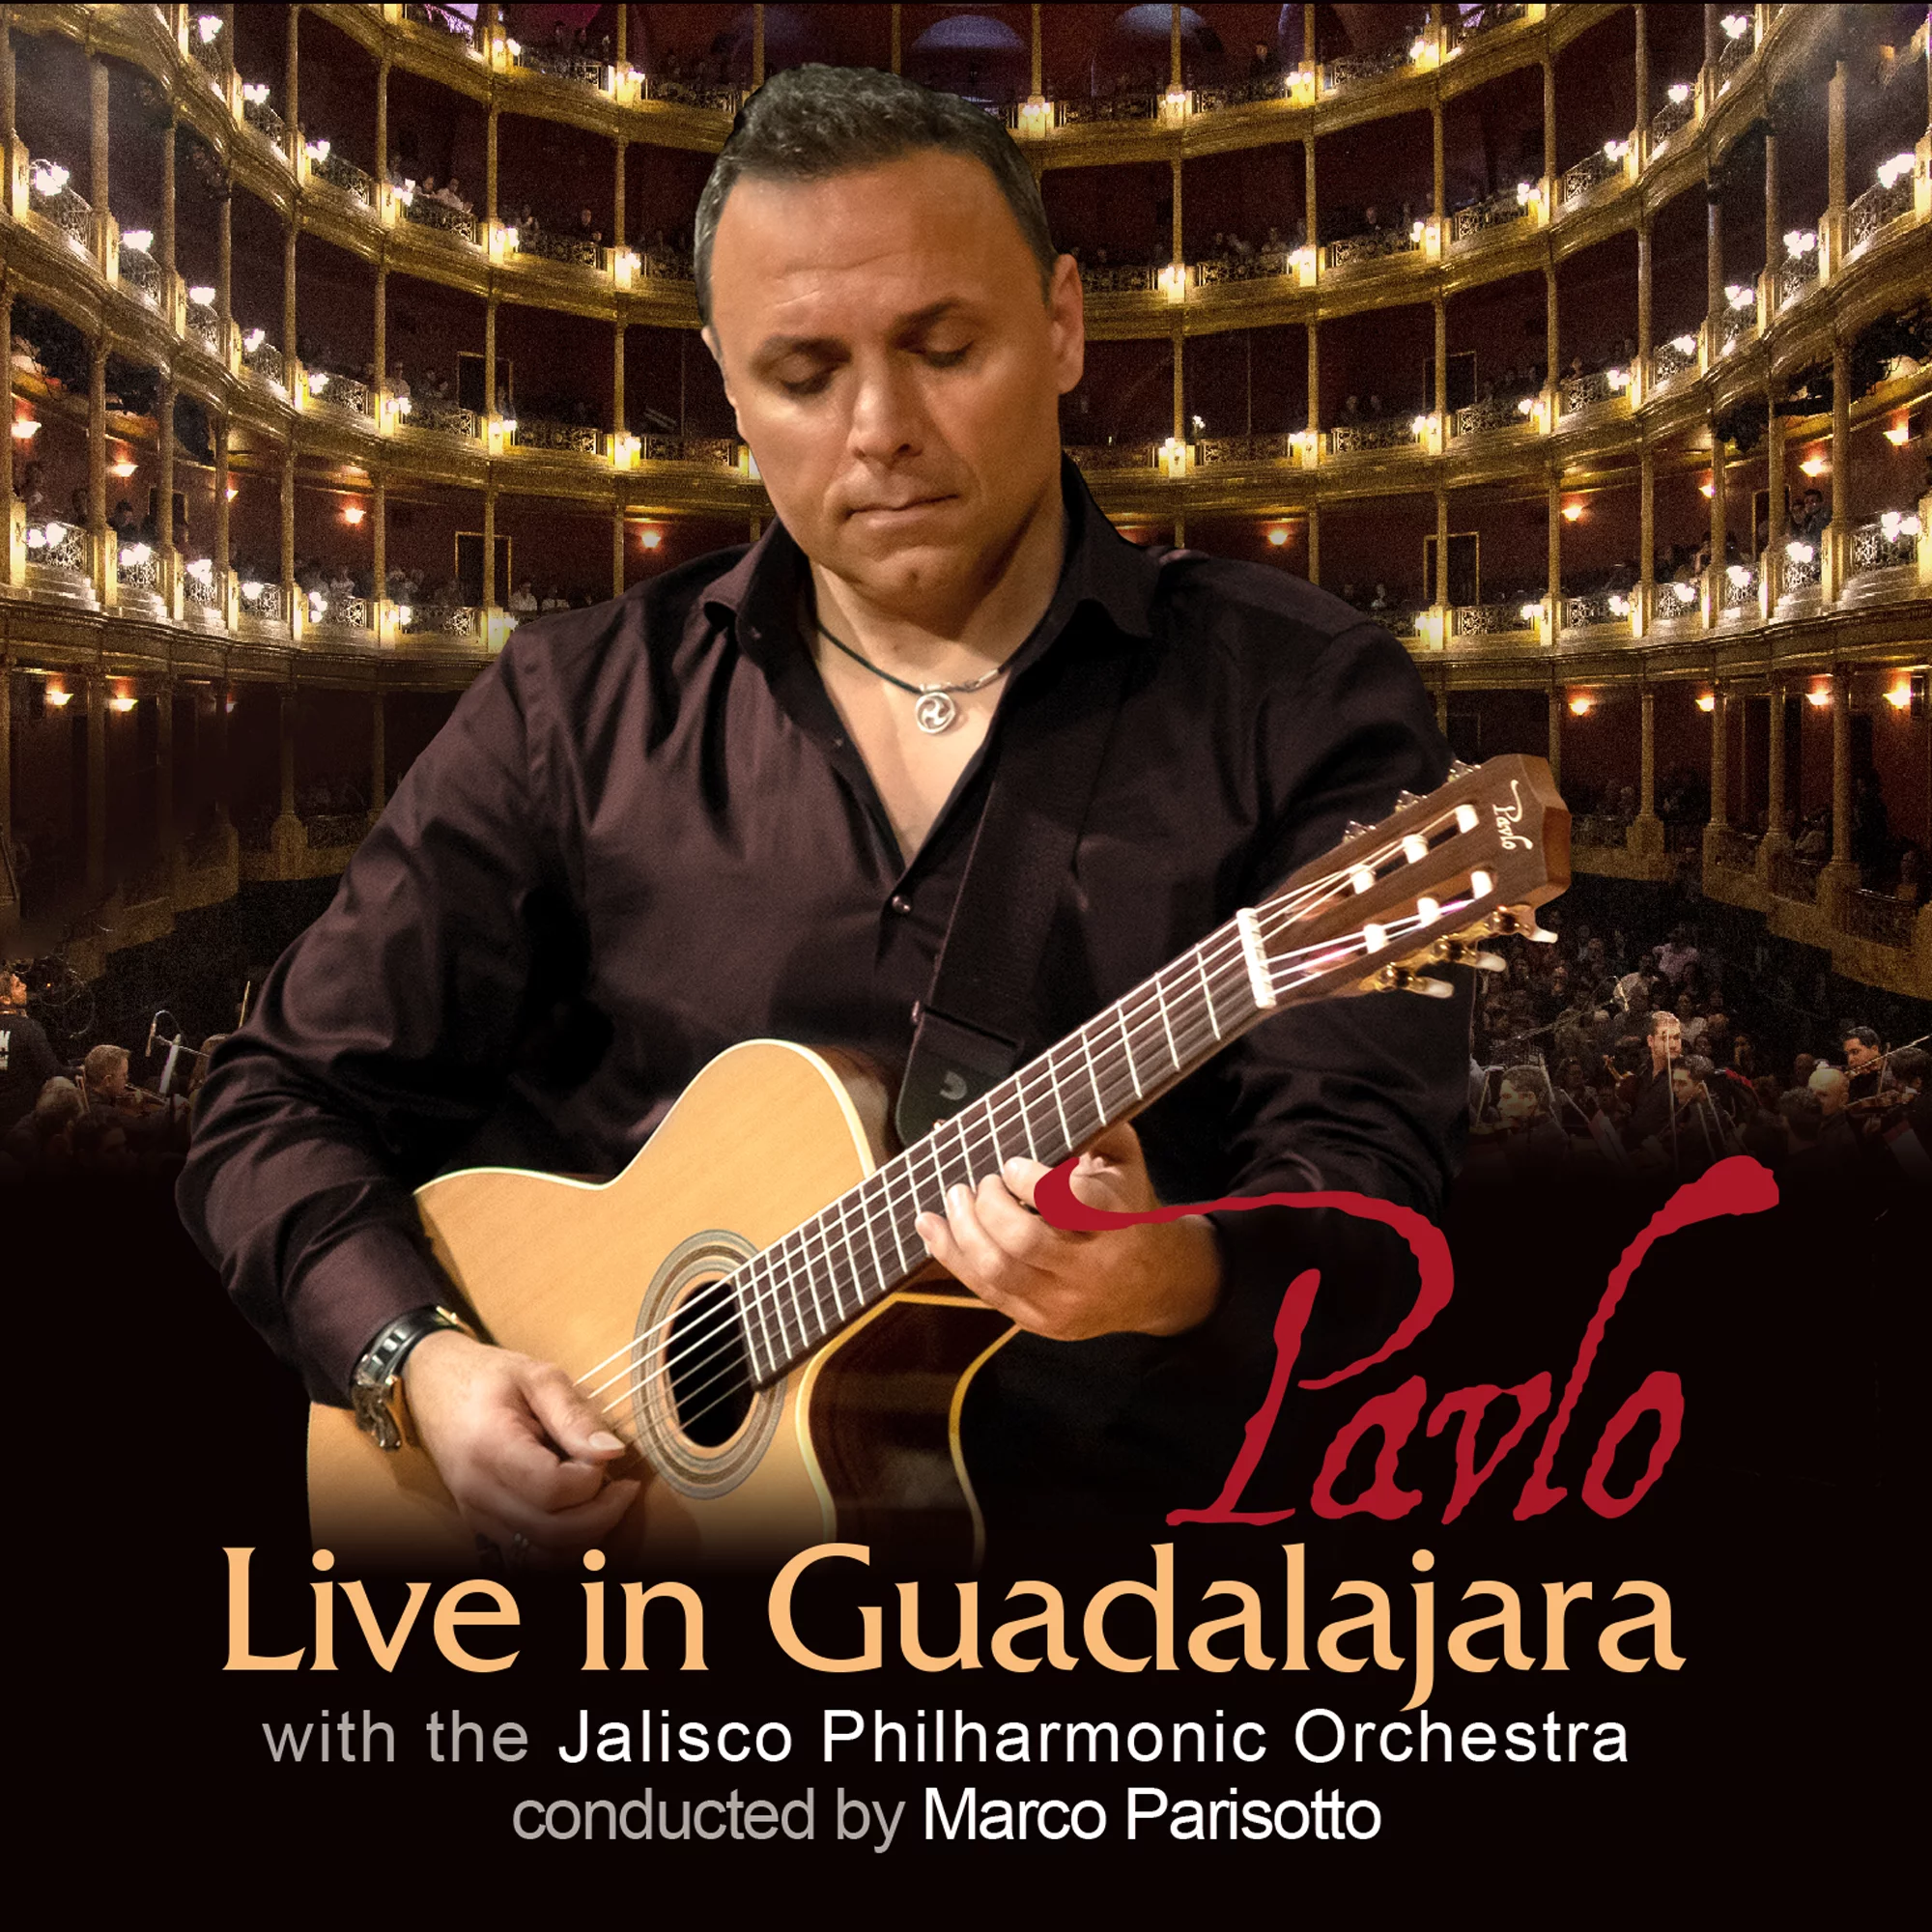 New CD & DVD “Live in Guadalajara w/ Jalisco Philharmonic Orchestra